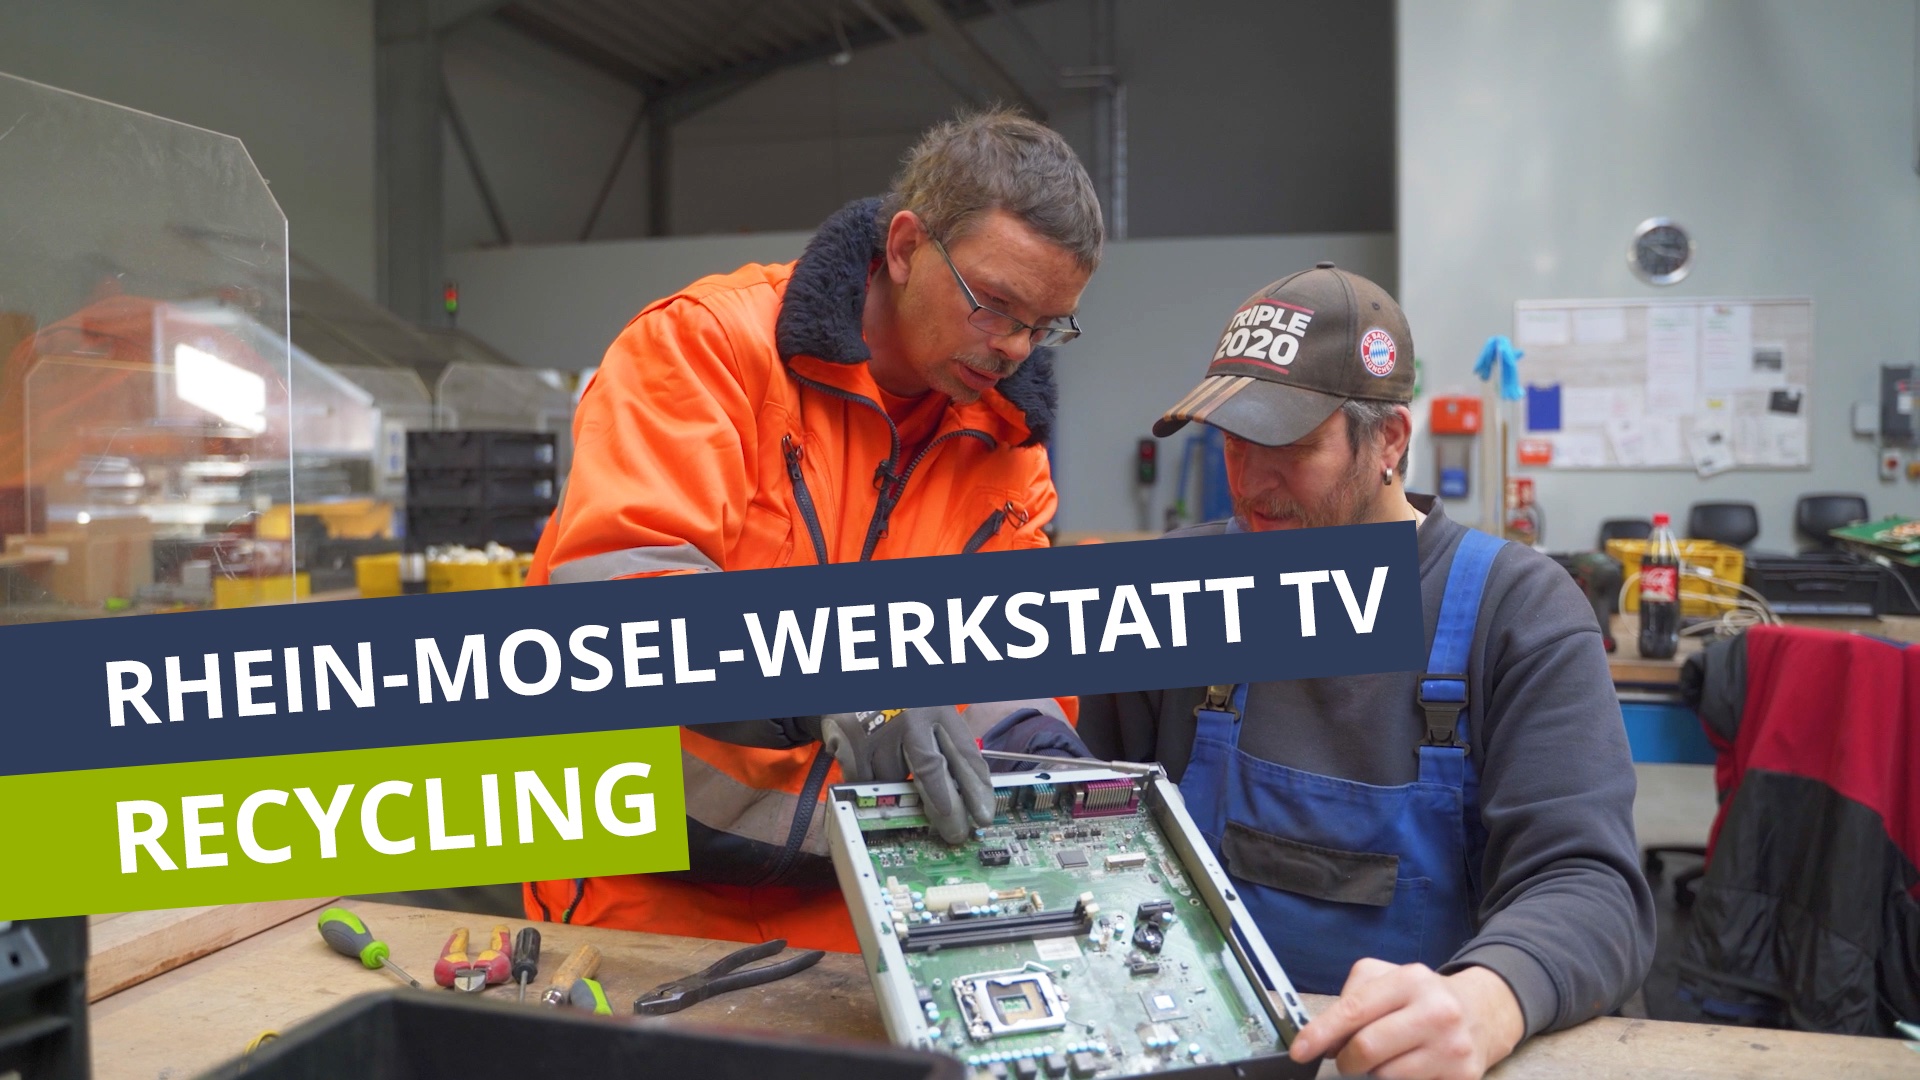 Rhein-Mosel-Werkstatt TV: Recycling